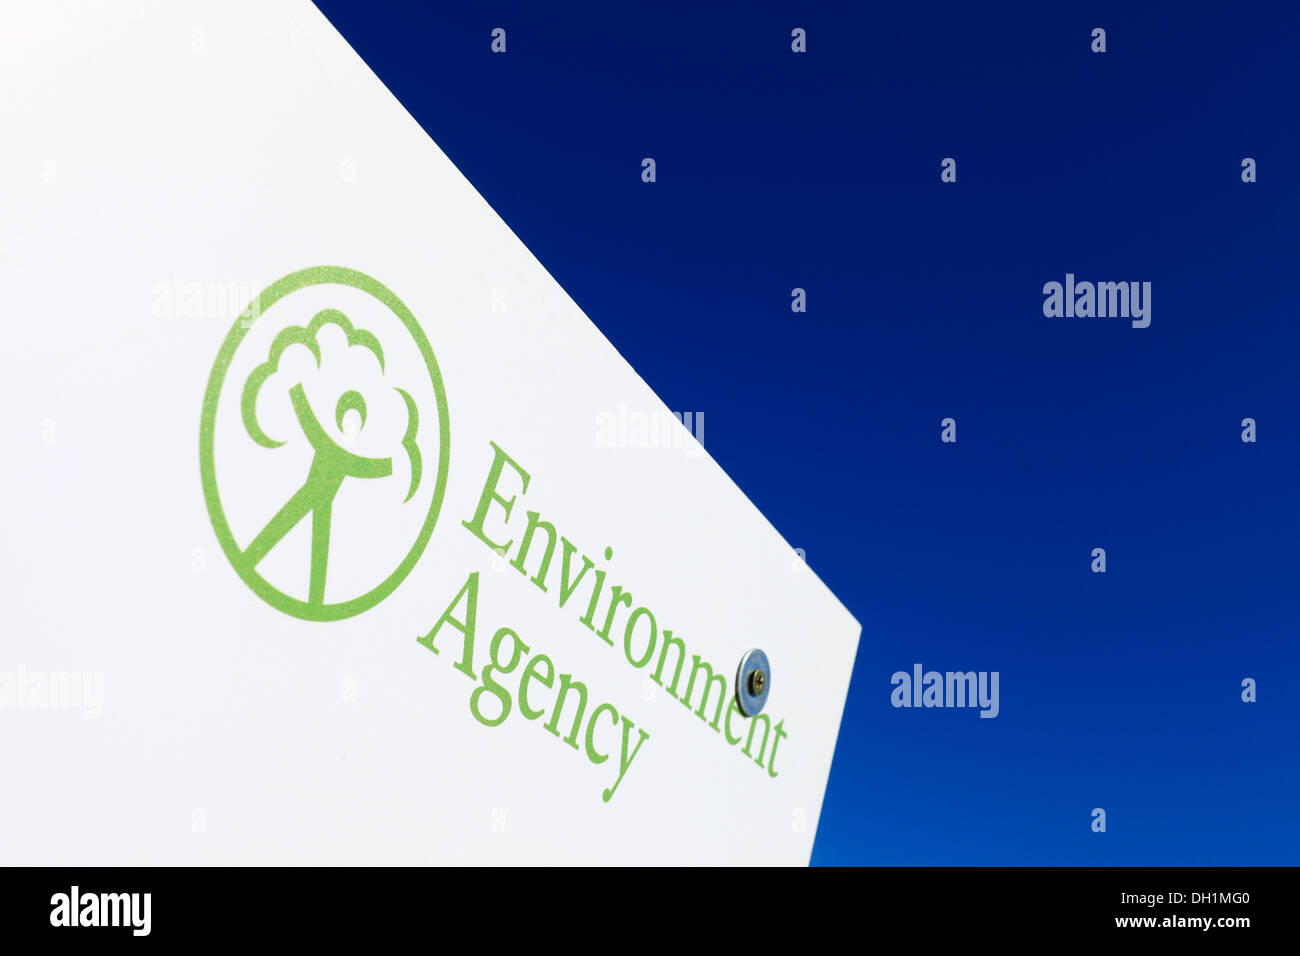 Agenzia per l'ambiente logo su una scheda con cielo blu dietro. Foto Stock